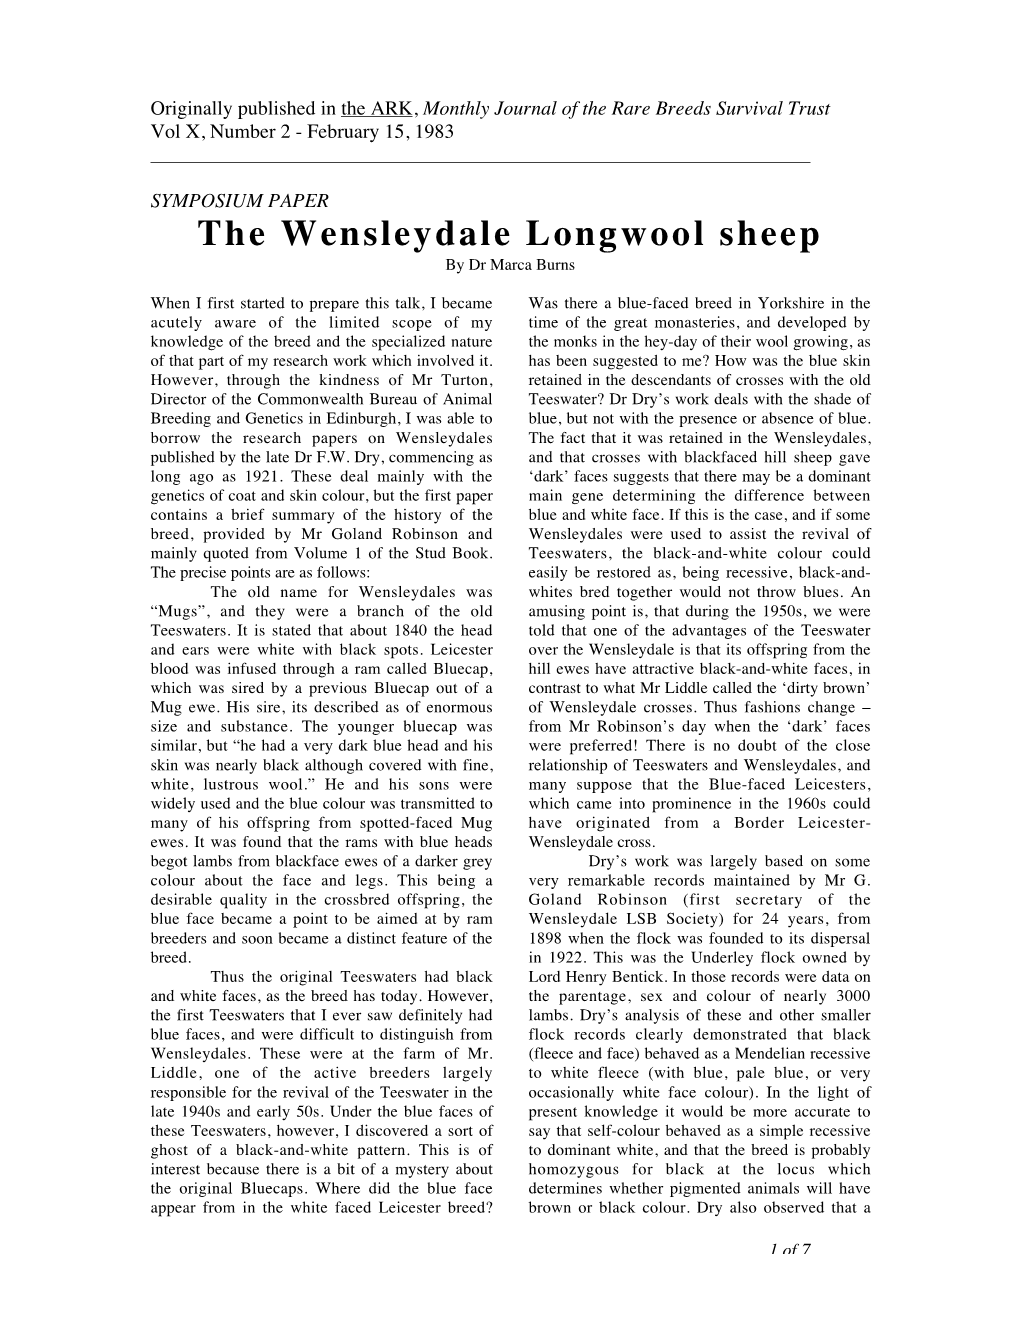 The Wensleydale Longwool Sheep by Dr Marca Burns